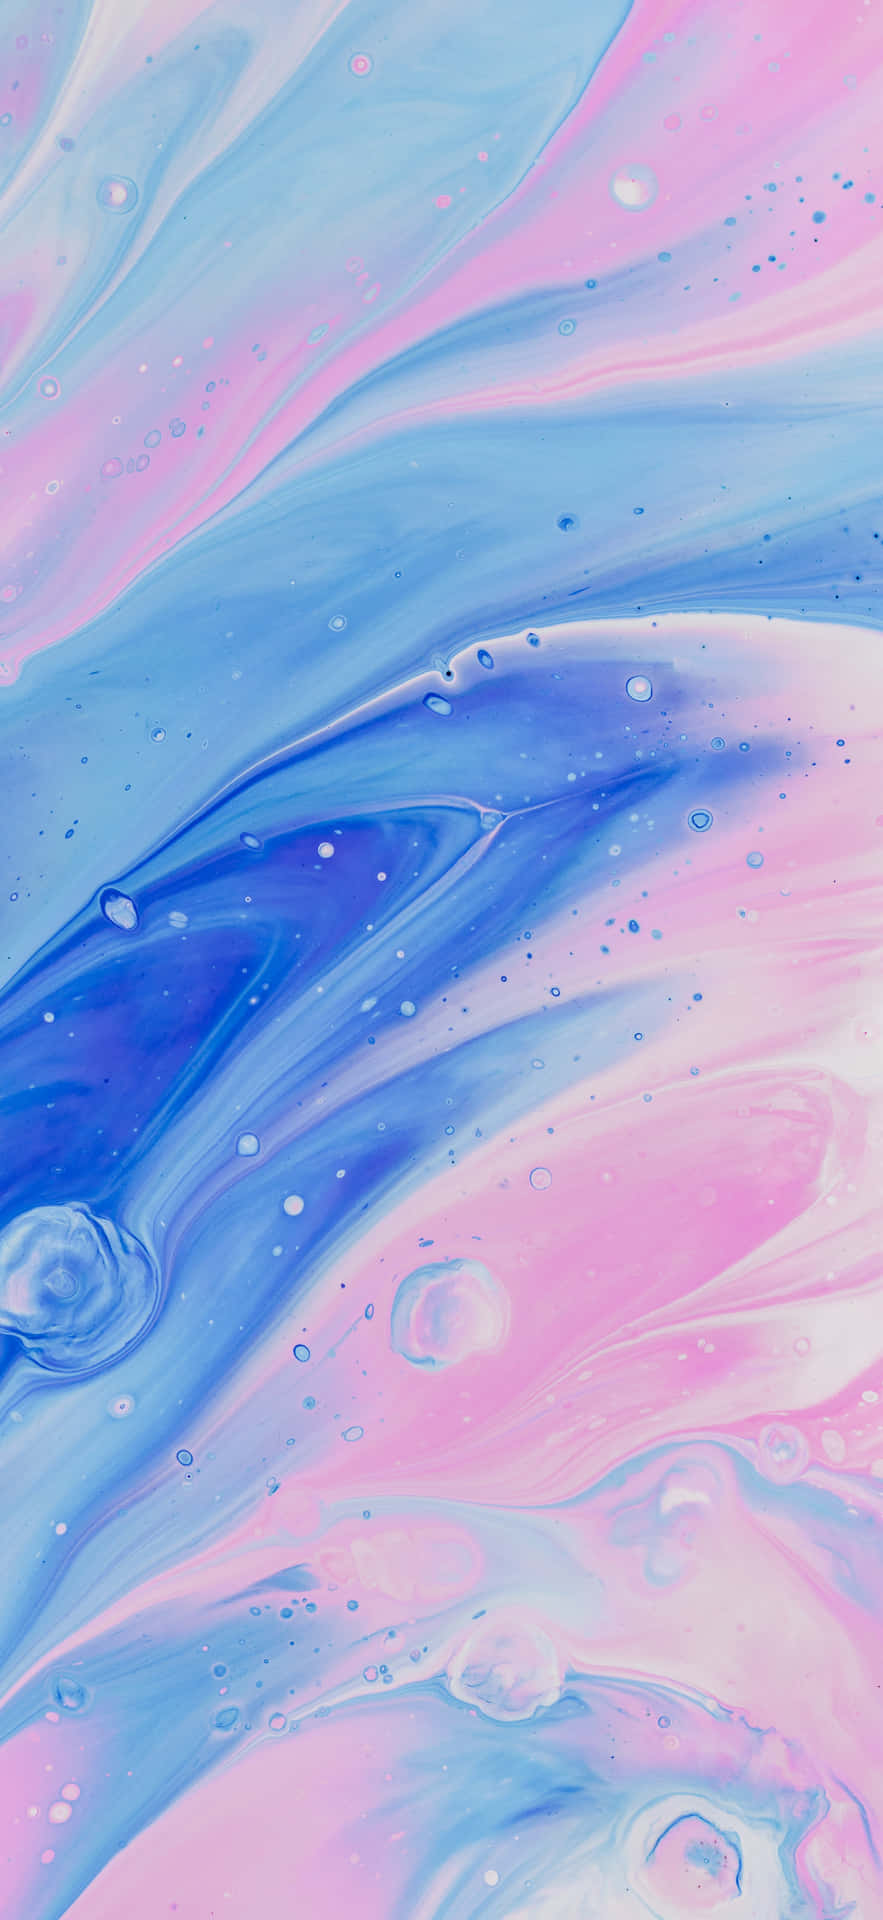 IOS iPhone X Marmor Baggrund i Pastel Blå-Rosa